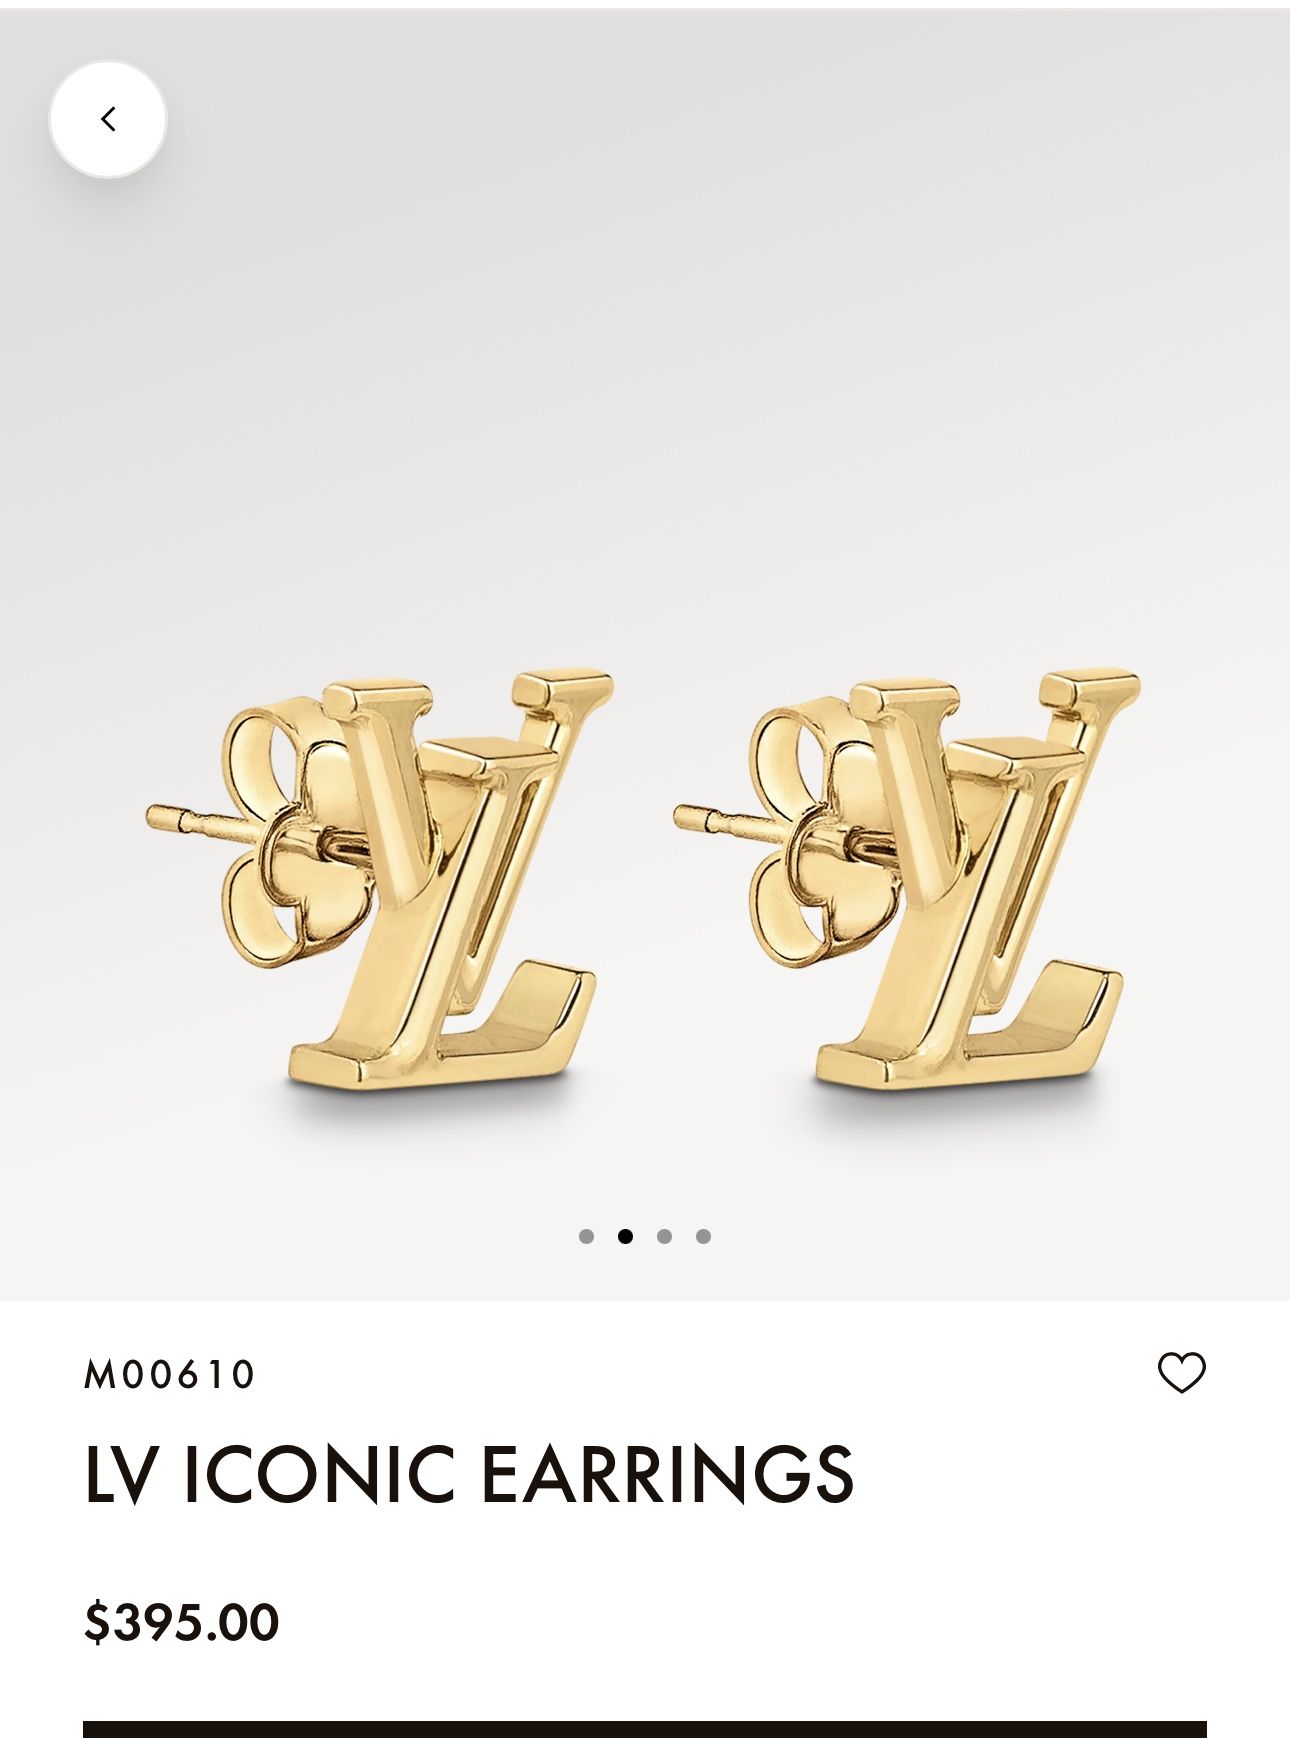 LV Iconic earrings